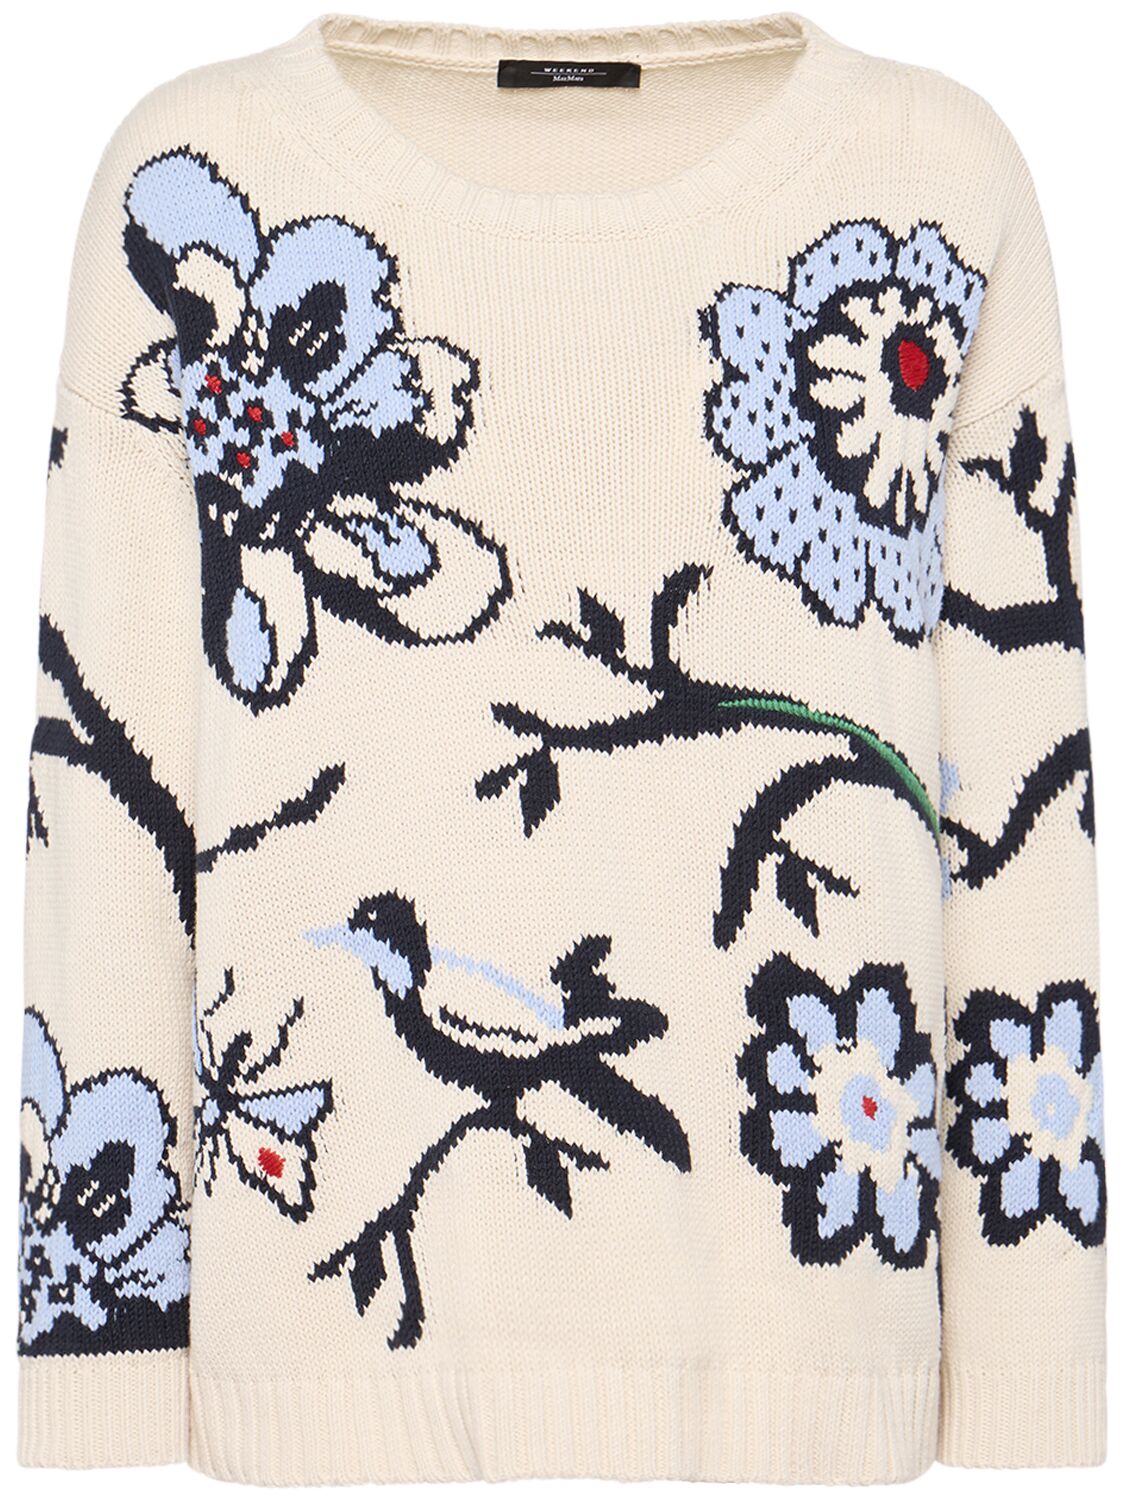 Weekend Max Mara Dolmen Embroidered Cotton Blend Sweater In White/multi